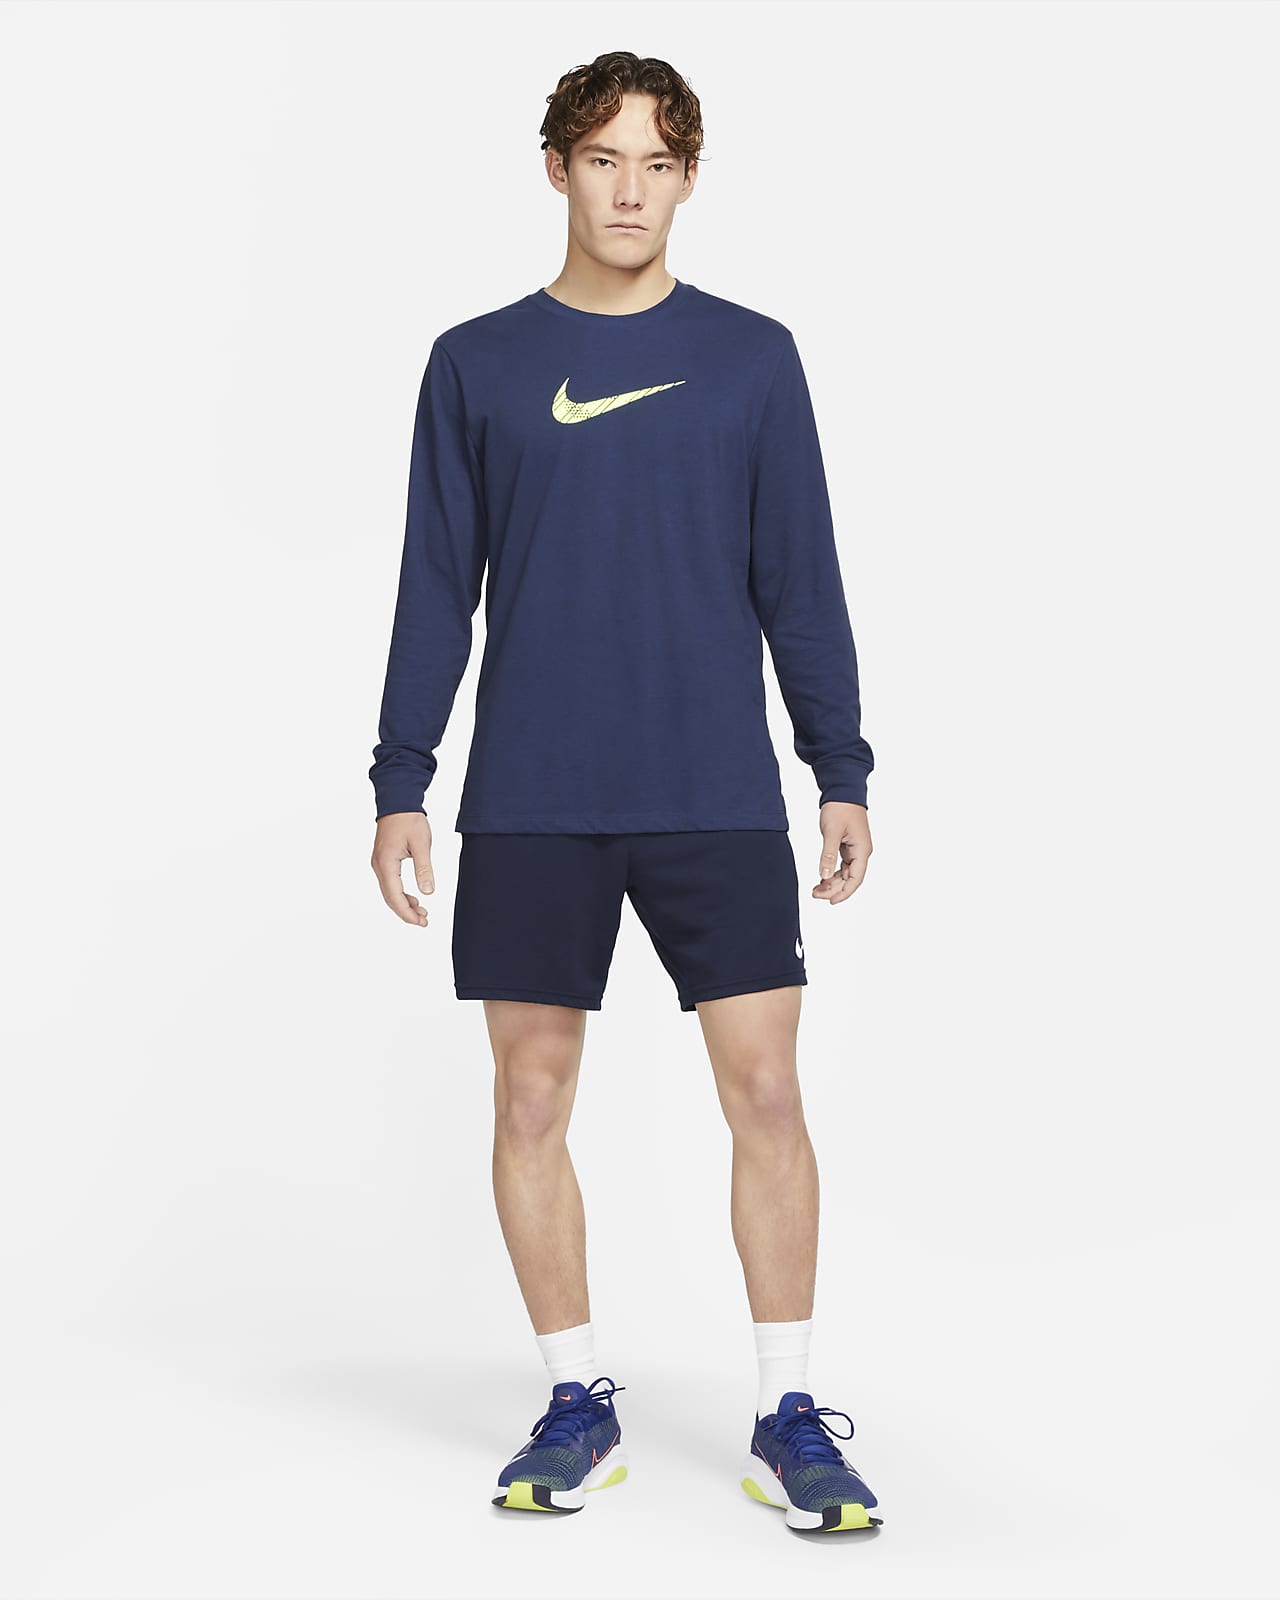 Nike Men\'s Mesh ID Shorts. Nike Training